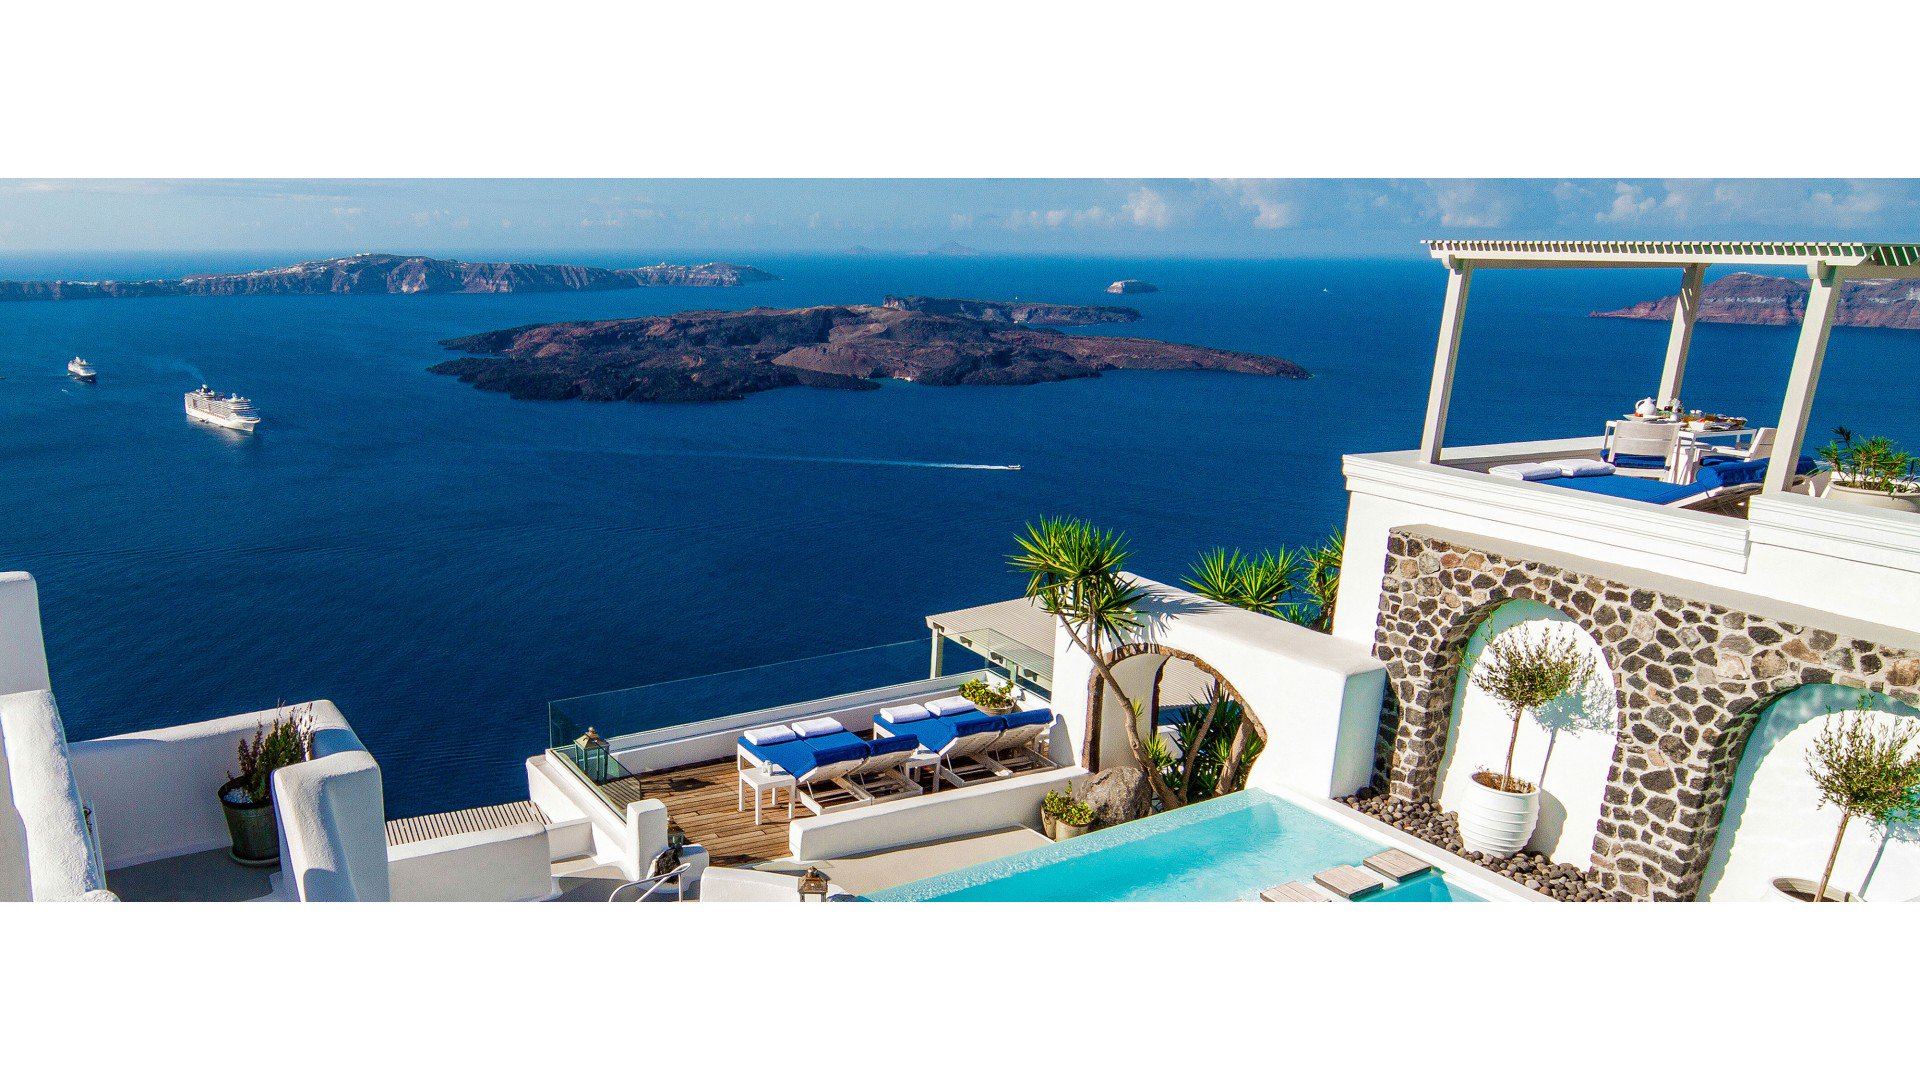 Iconic Santorini hotel - Imerovigli, Santorini - Smith Hotels